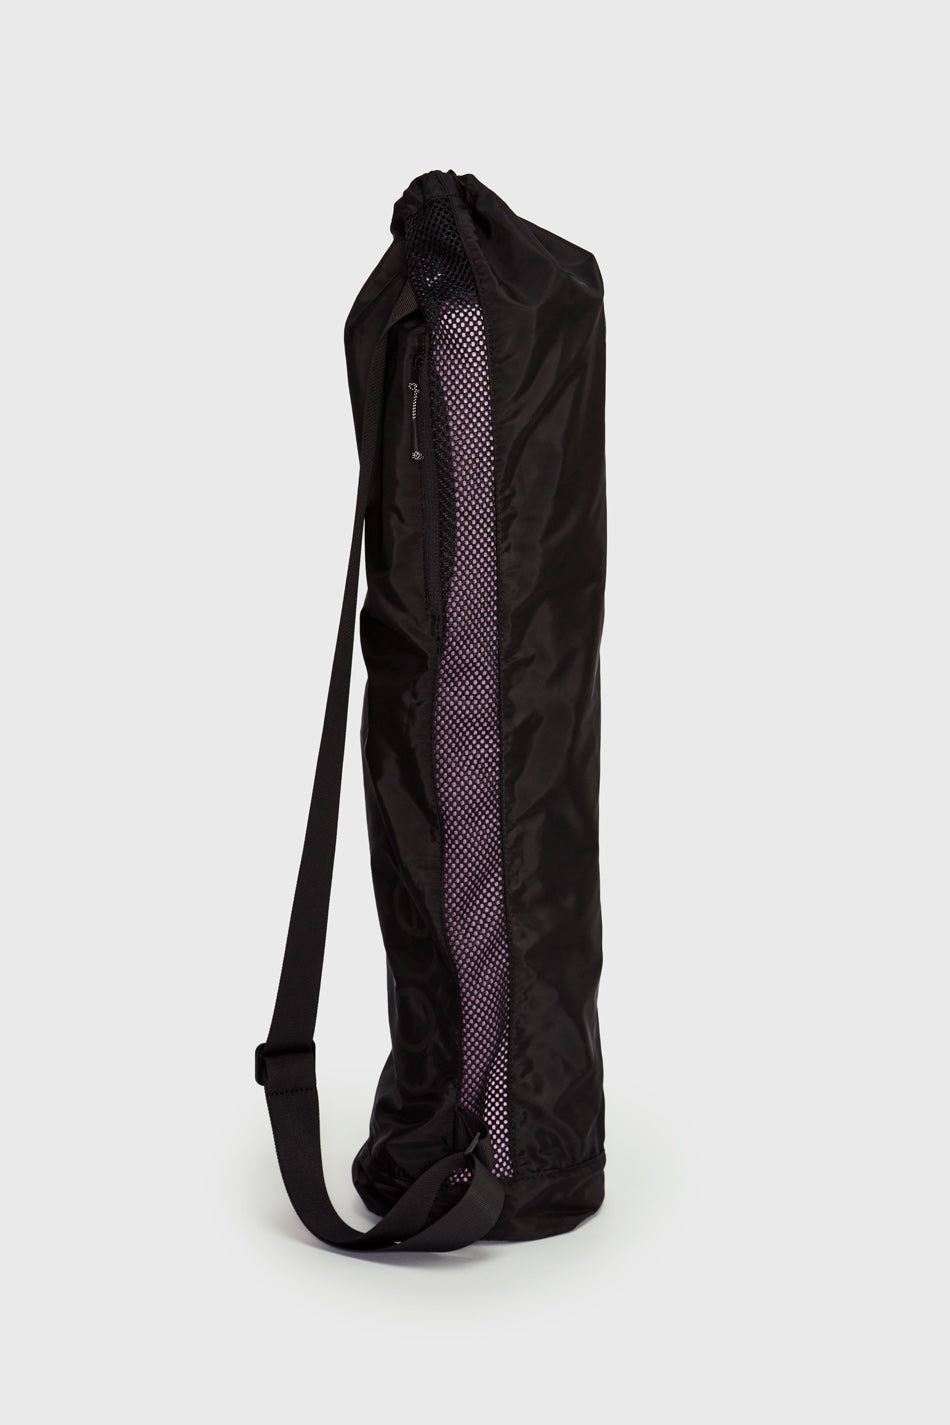 Buy Yoga Mat Bag from Lole - Sport - Women's Apparel - Lolë